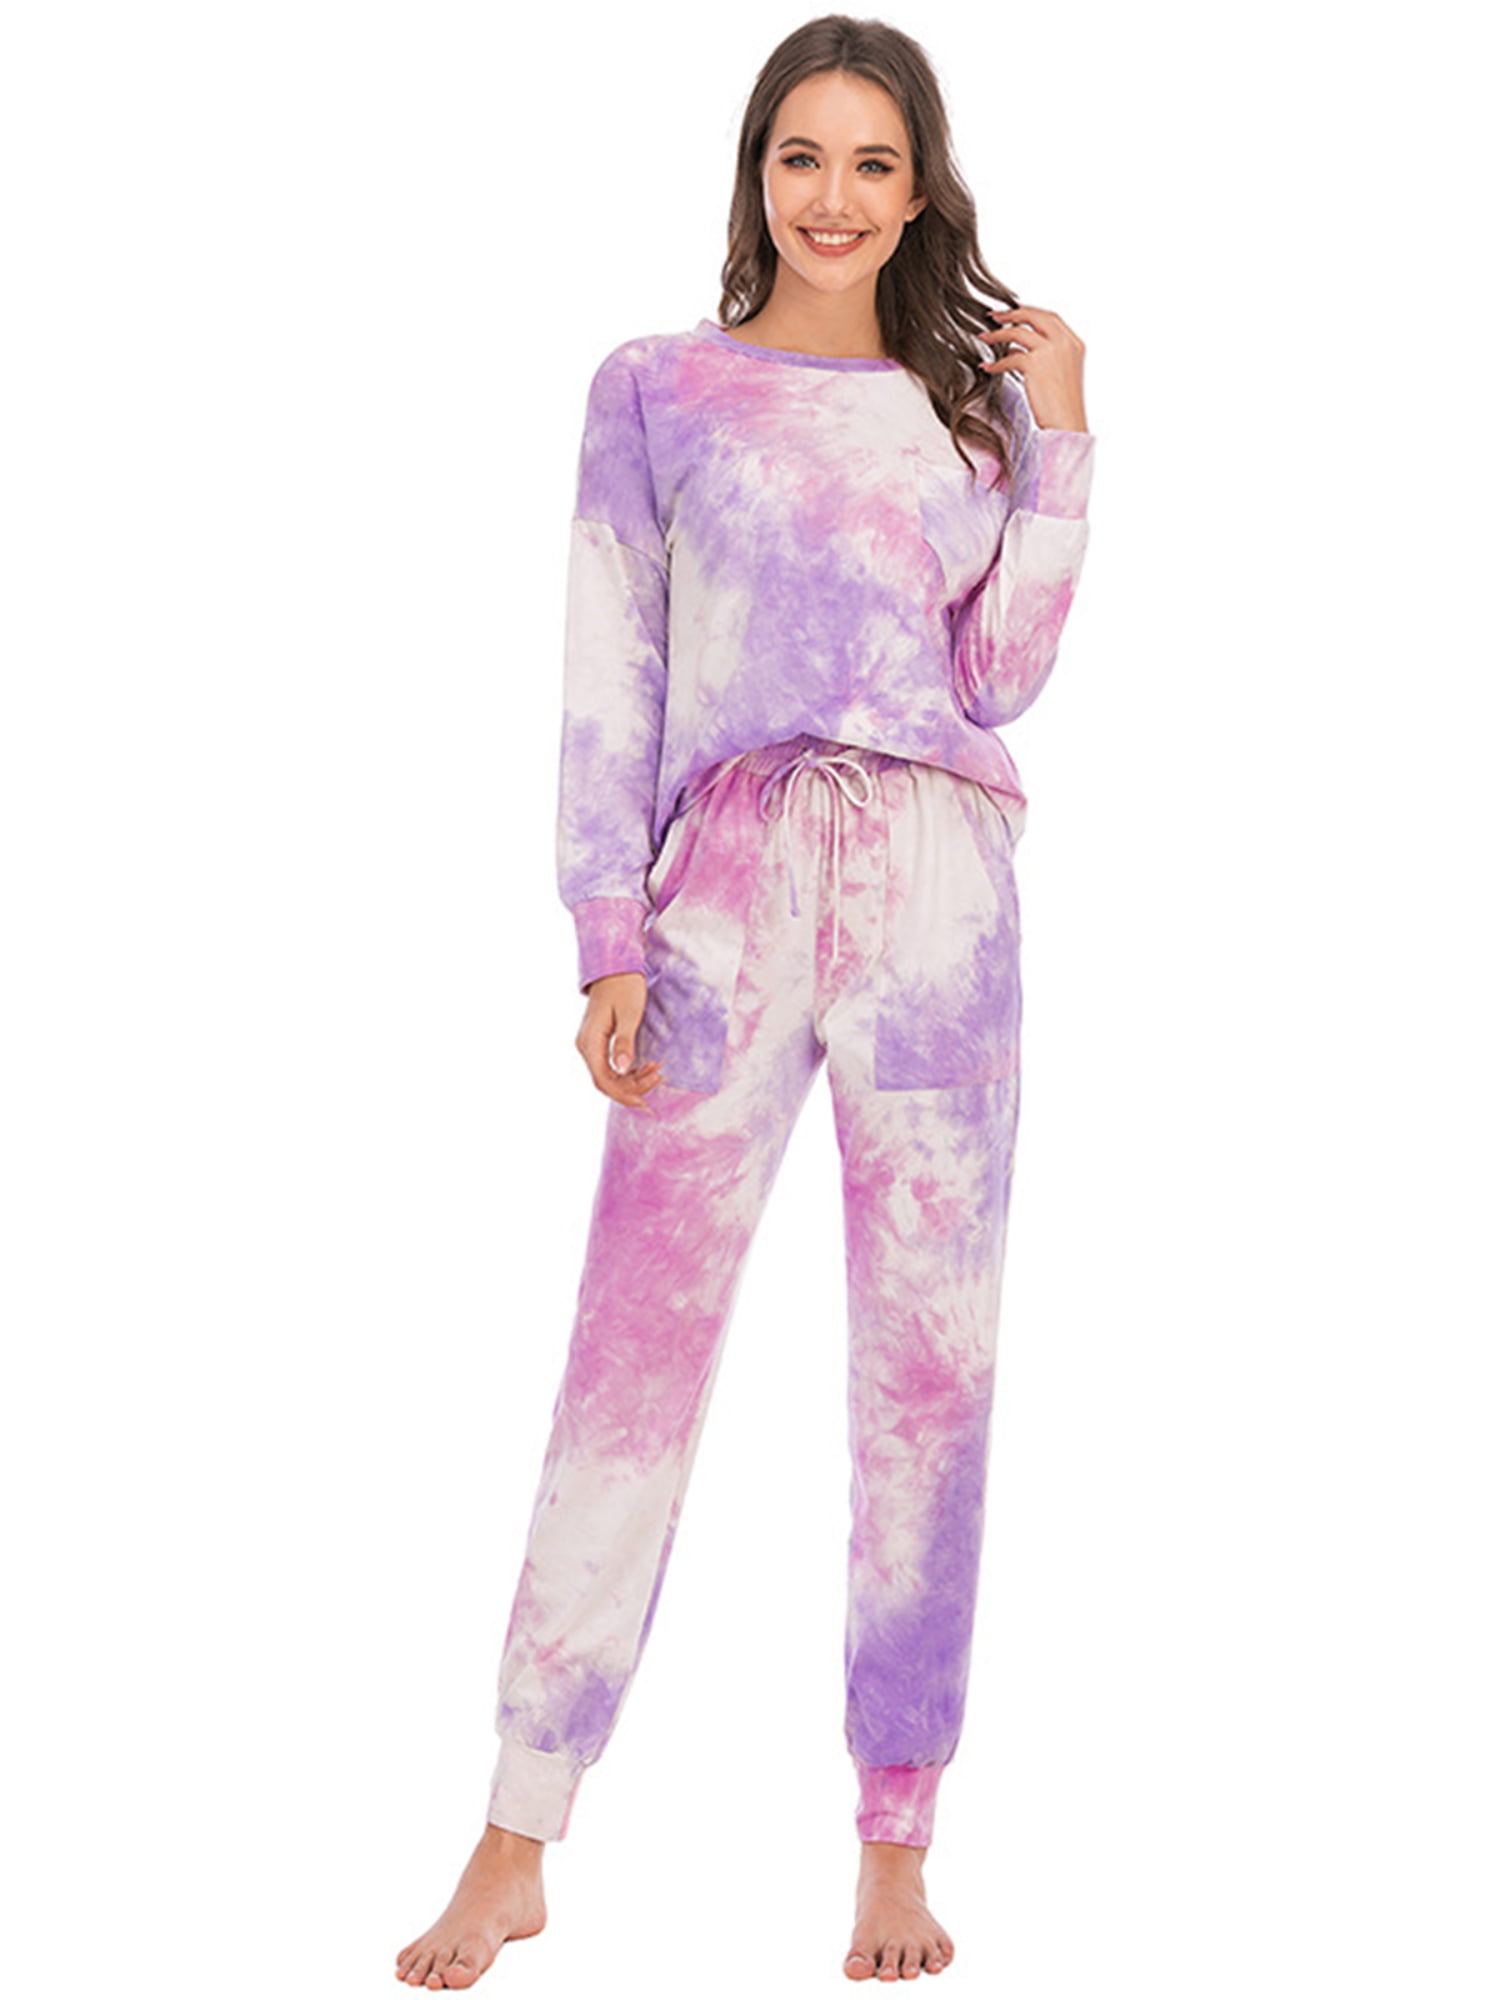 Lulubary Tie Dye Womens Pajama Sets 2 Piece Long/Short Sleeve Sweatshirt with Pants Sleepwear Nightwear Soft Pj Lounge Set 